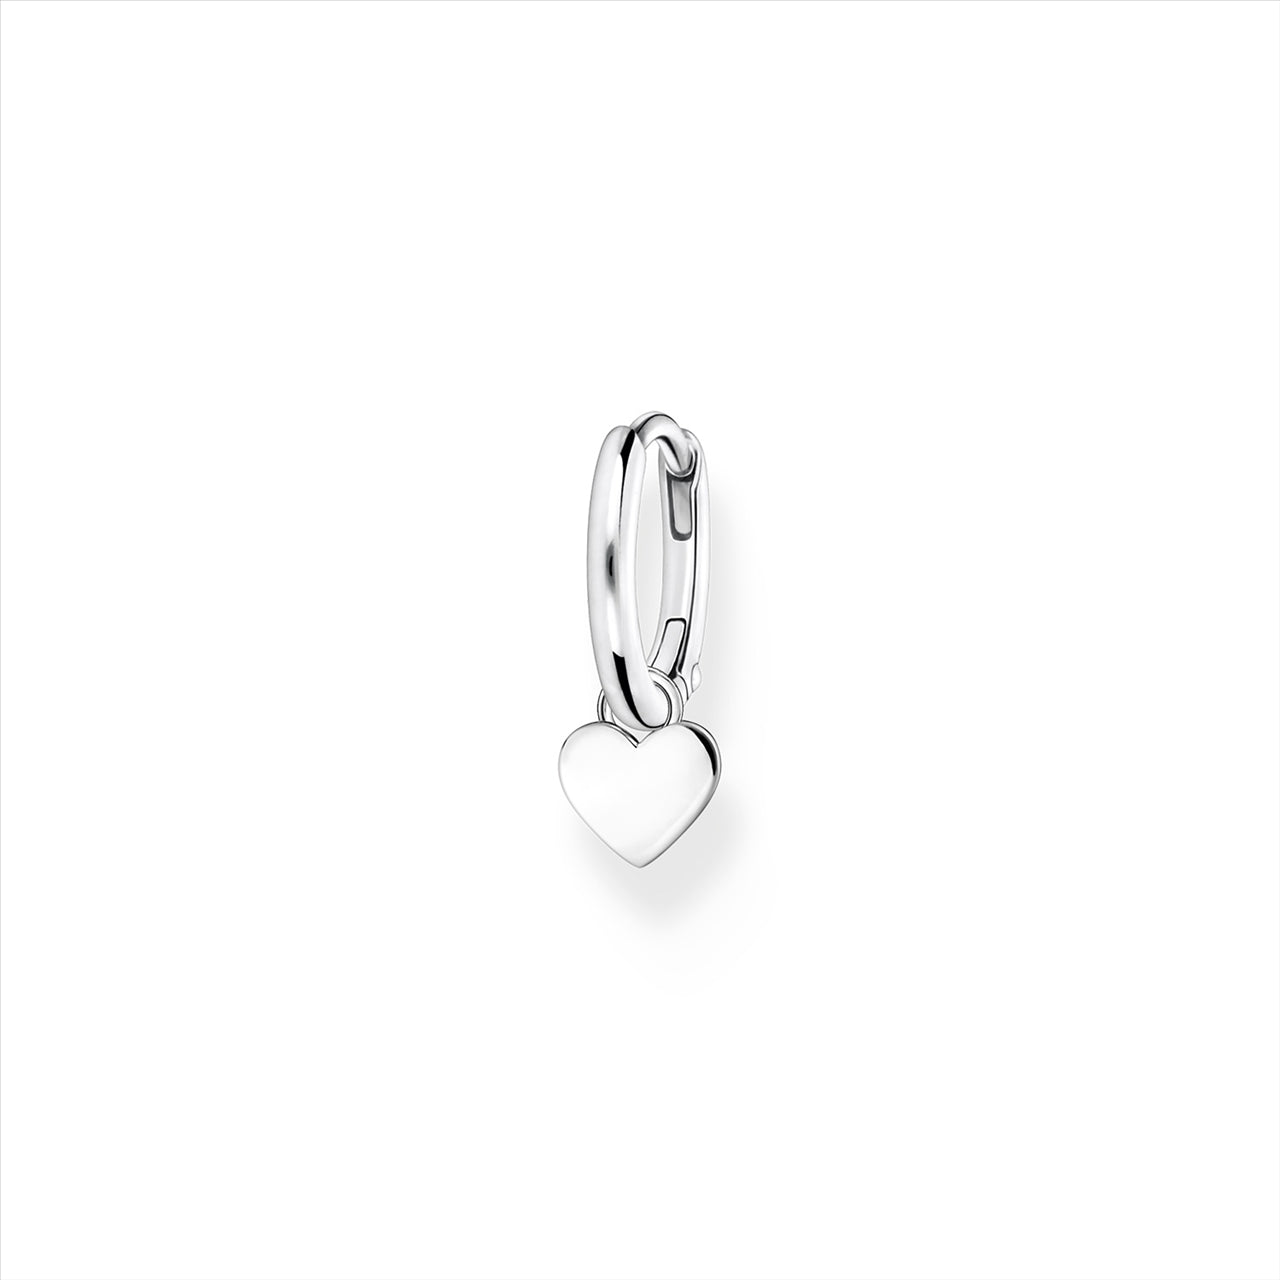 Thomas Sabo Single hoop earring with heart pendant silver